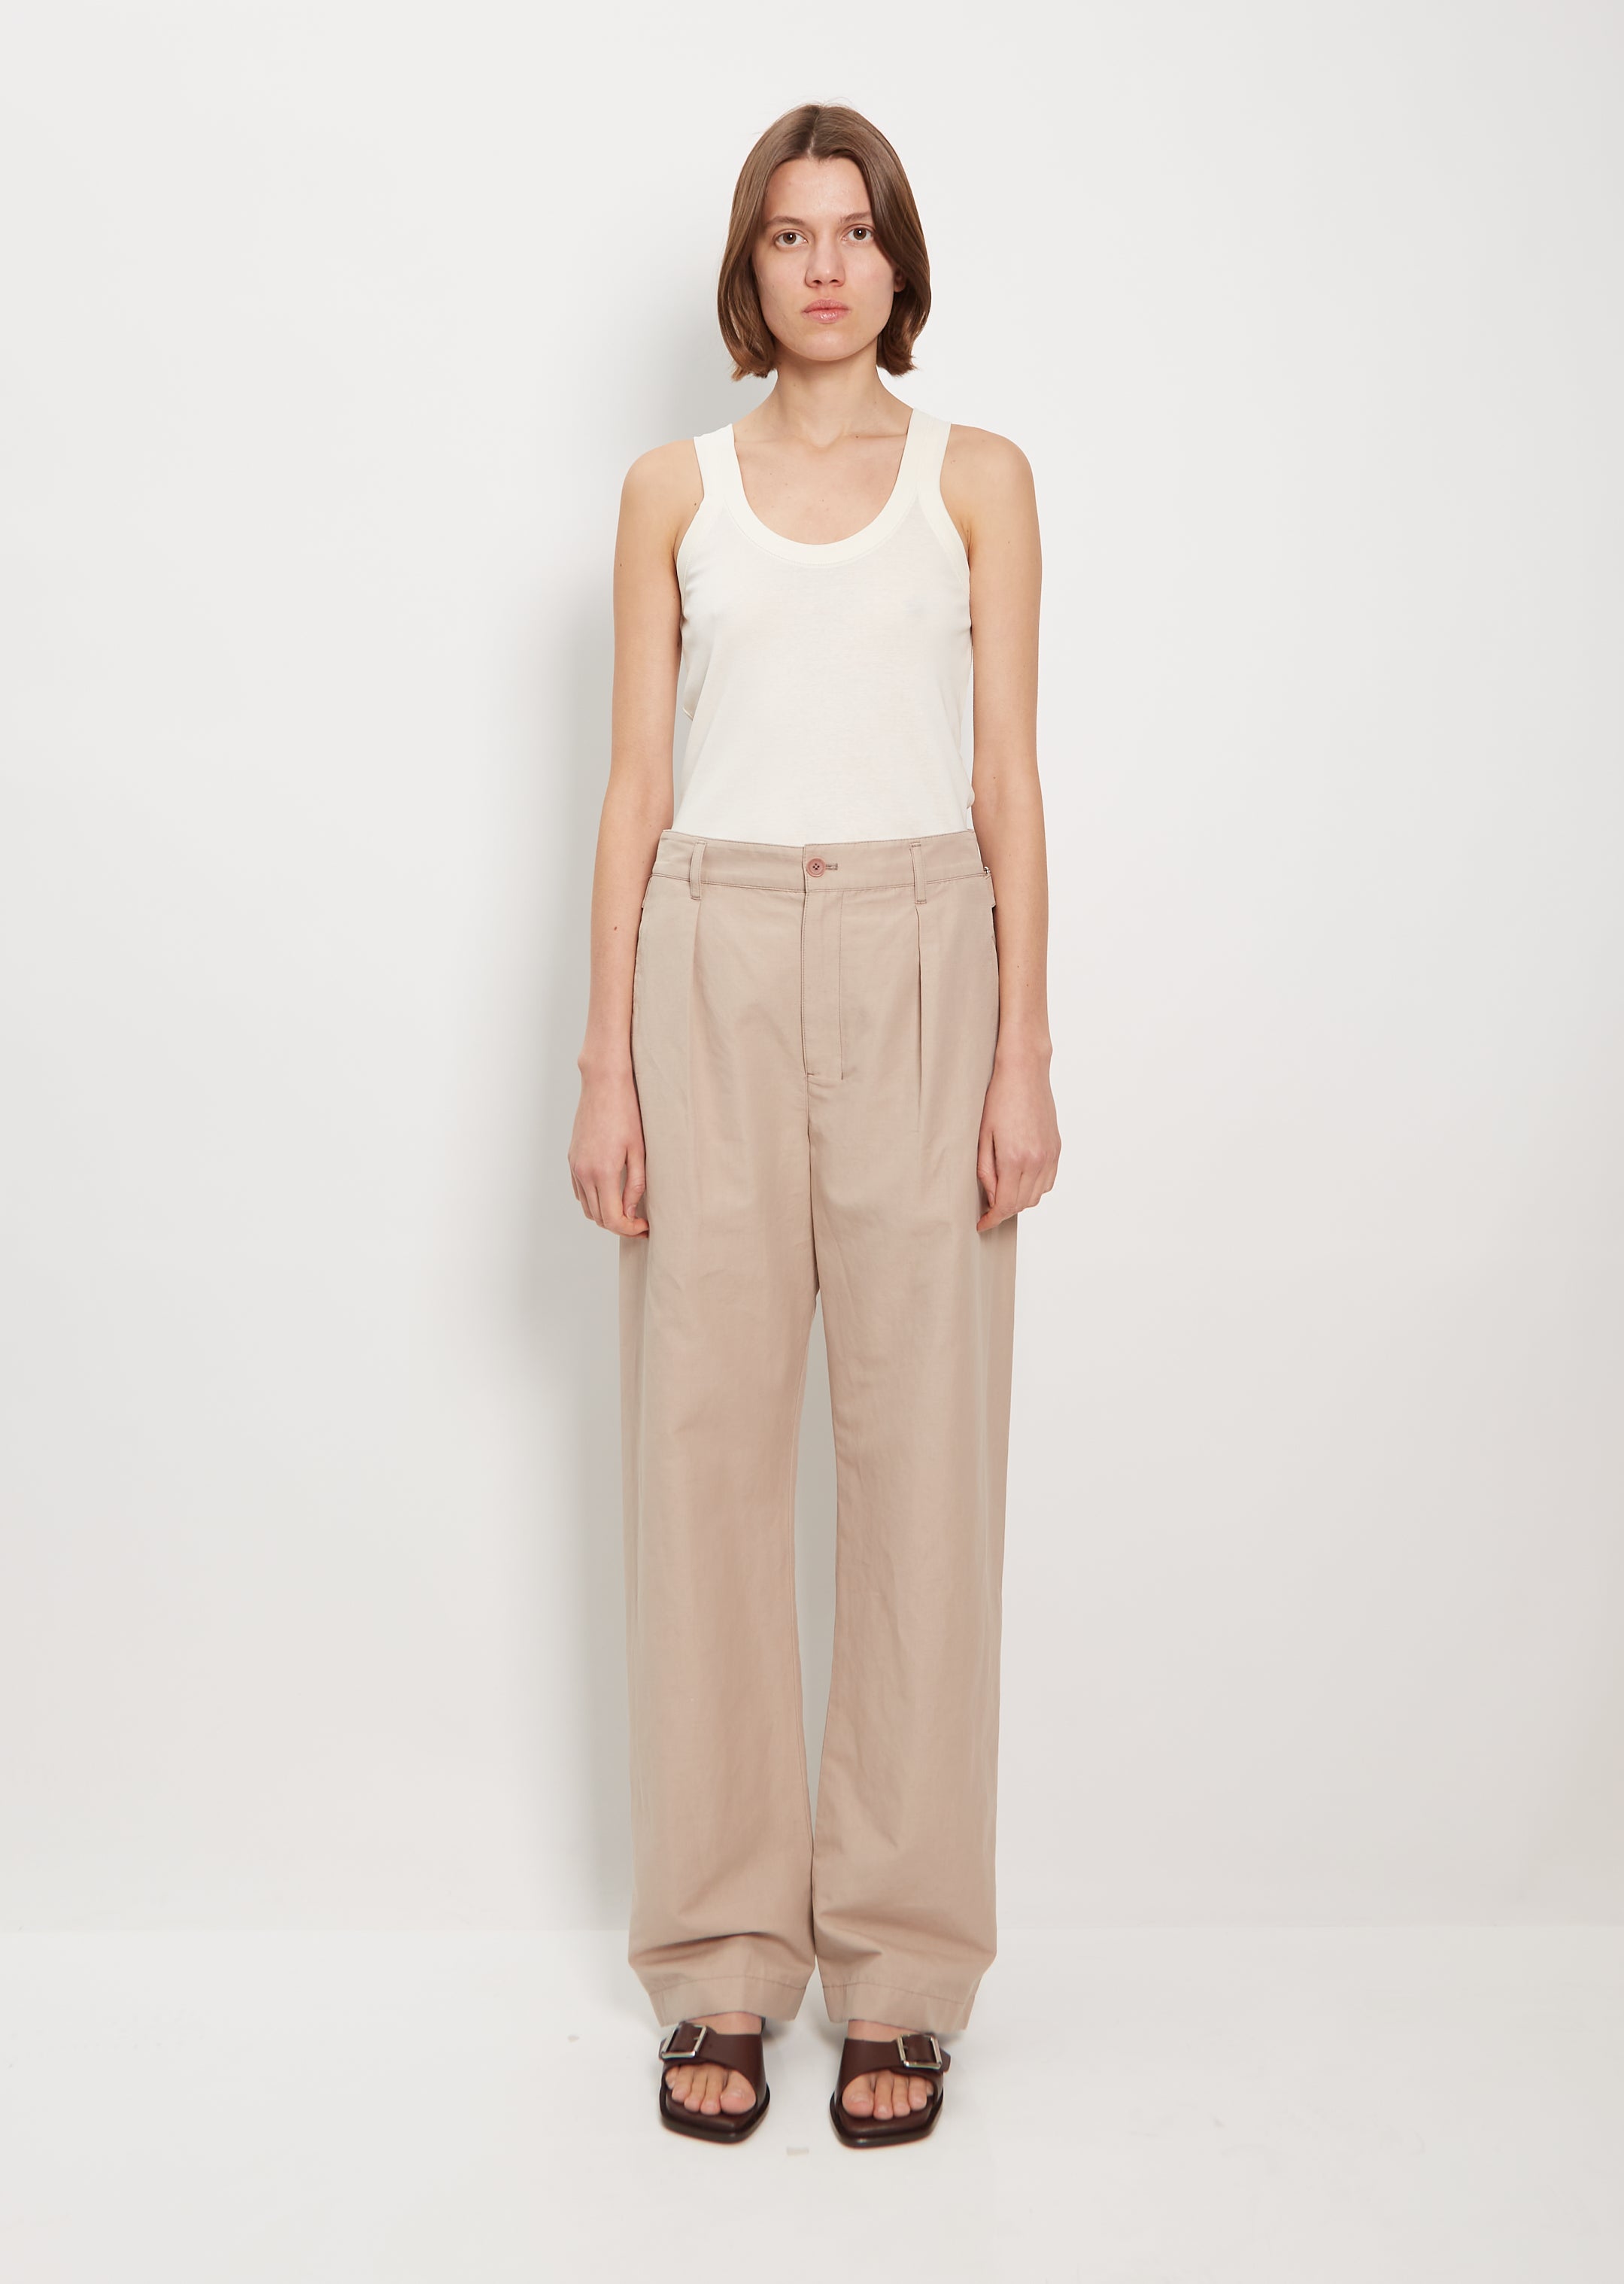 Pleated Straight Linen Cotton Pants - 34 / BG238 Rose